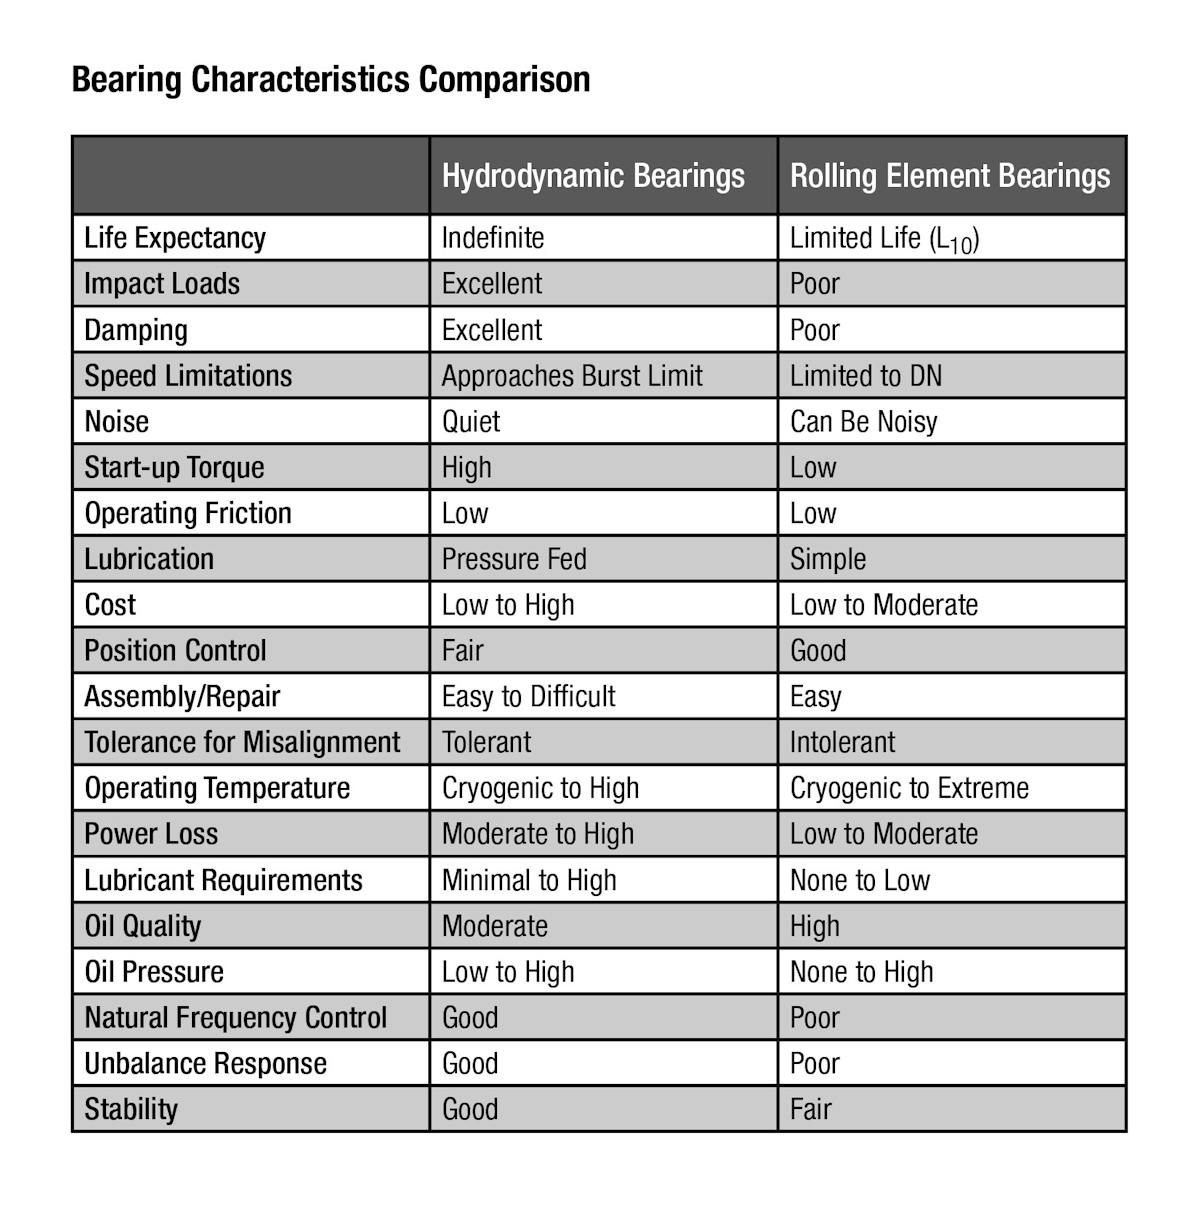 001 Bearing Characteristics Comparison